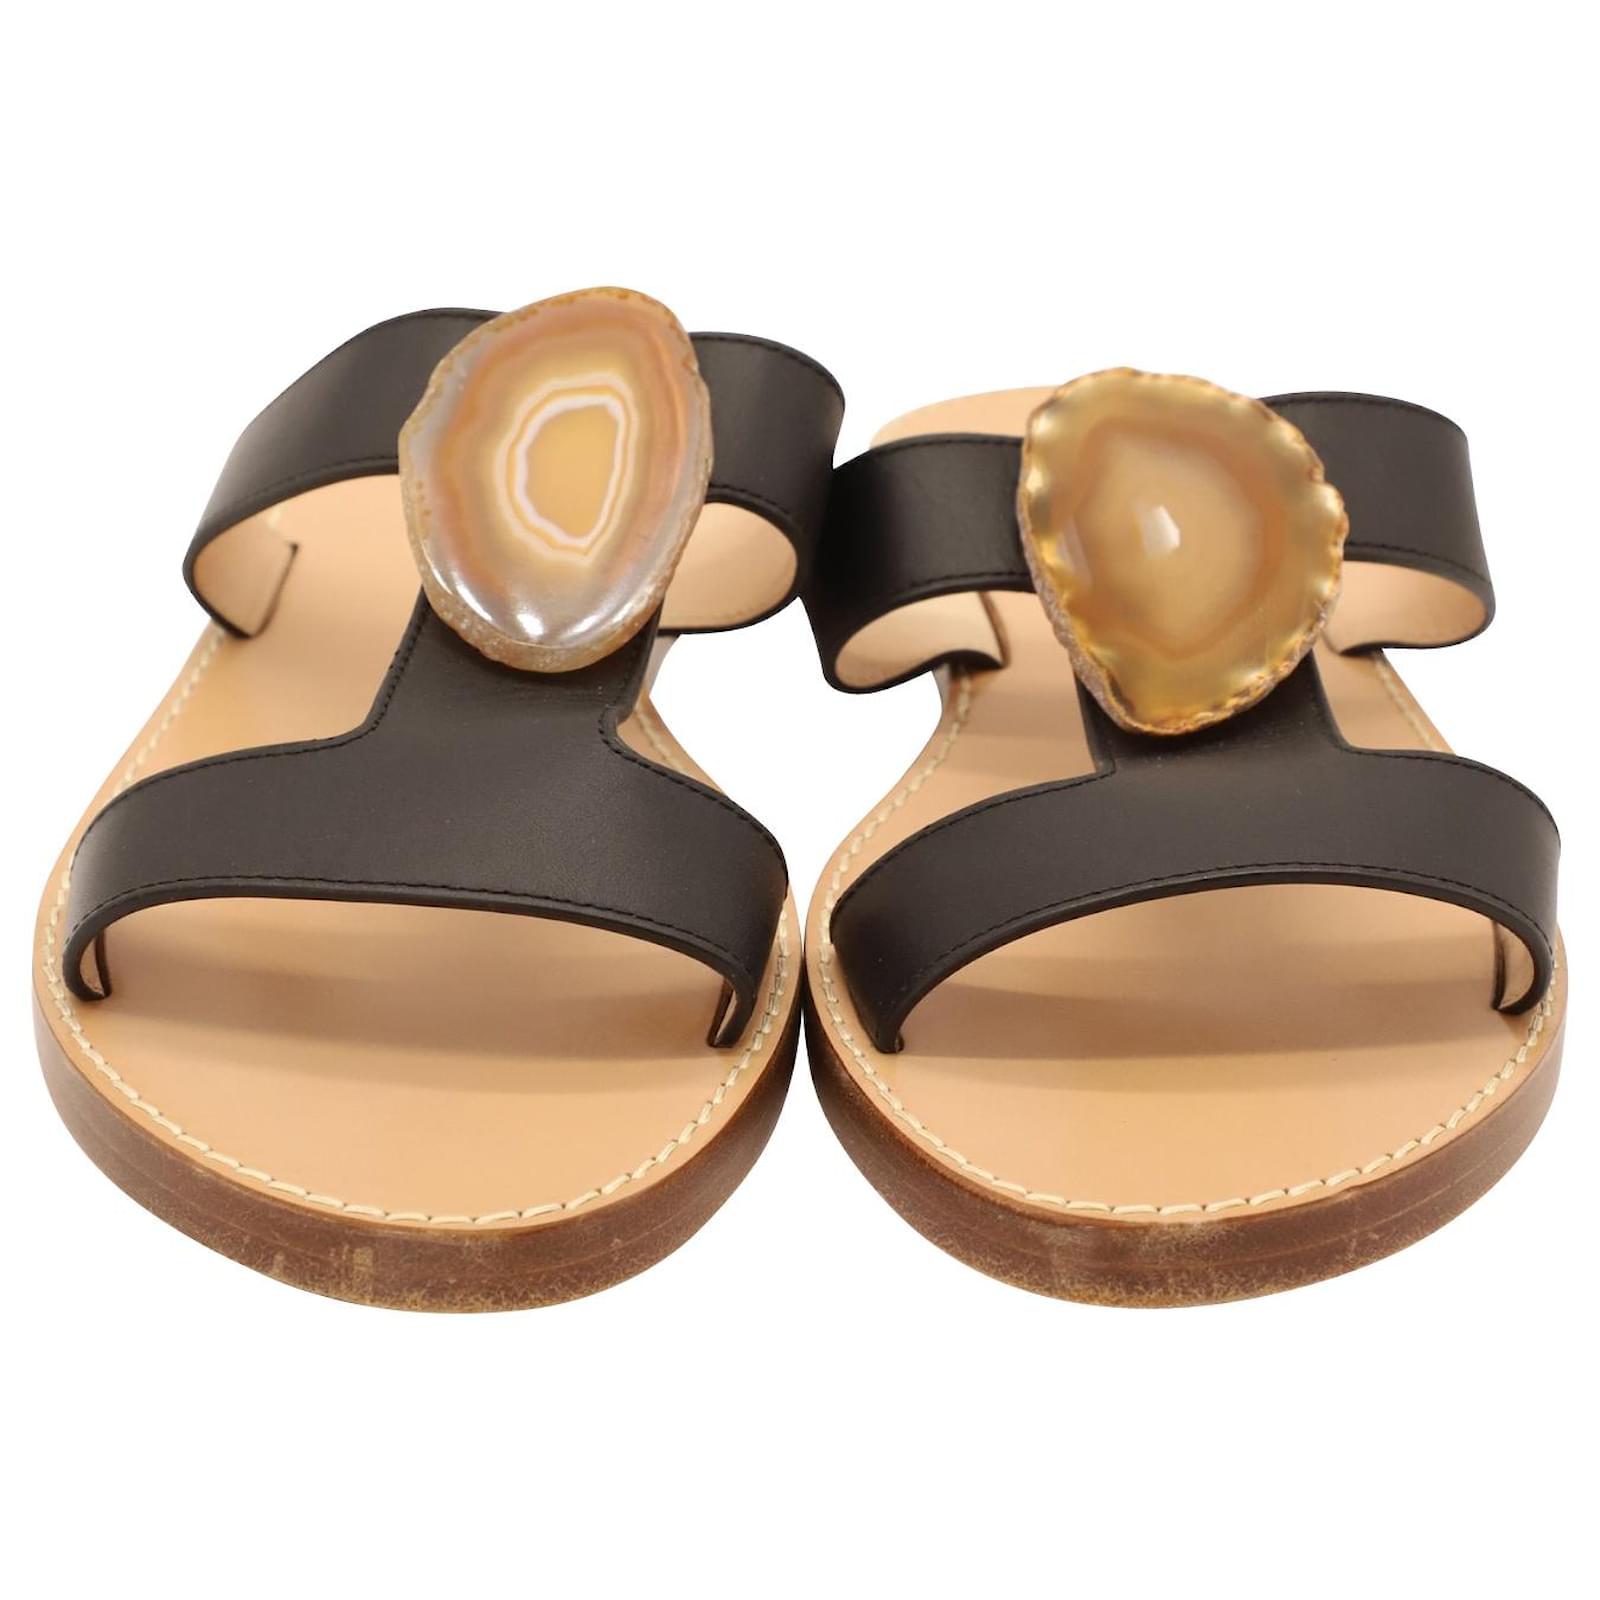 Gabriela Hearst Hades Agate-Embellished Sandals in Black Leather ref ...